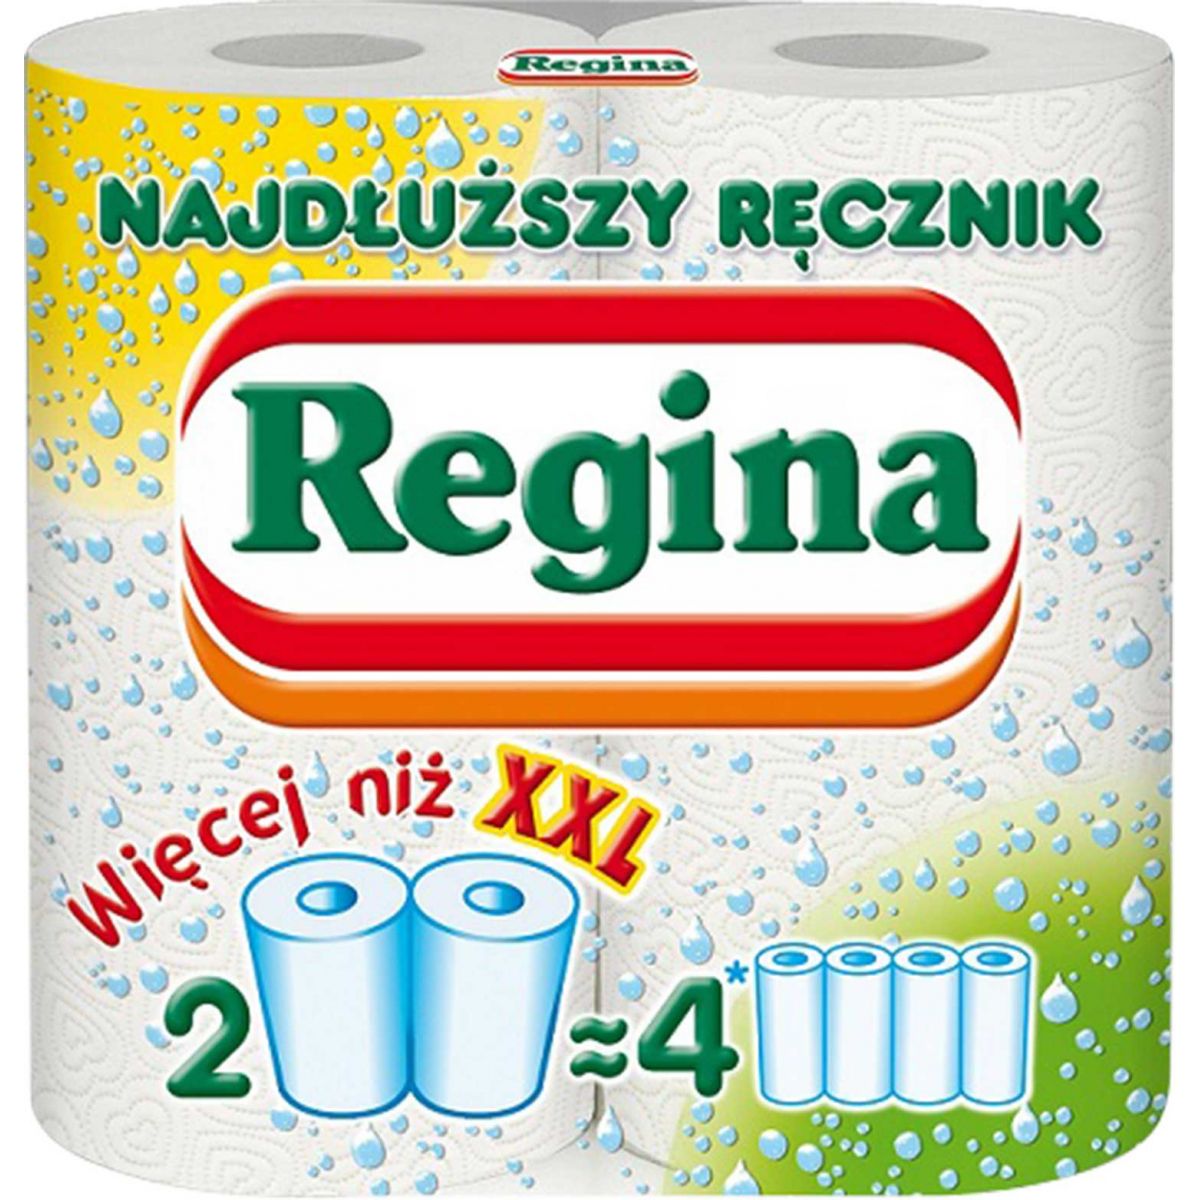 Ręcznik rolka Regina A`2 kolor: biały (405445)